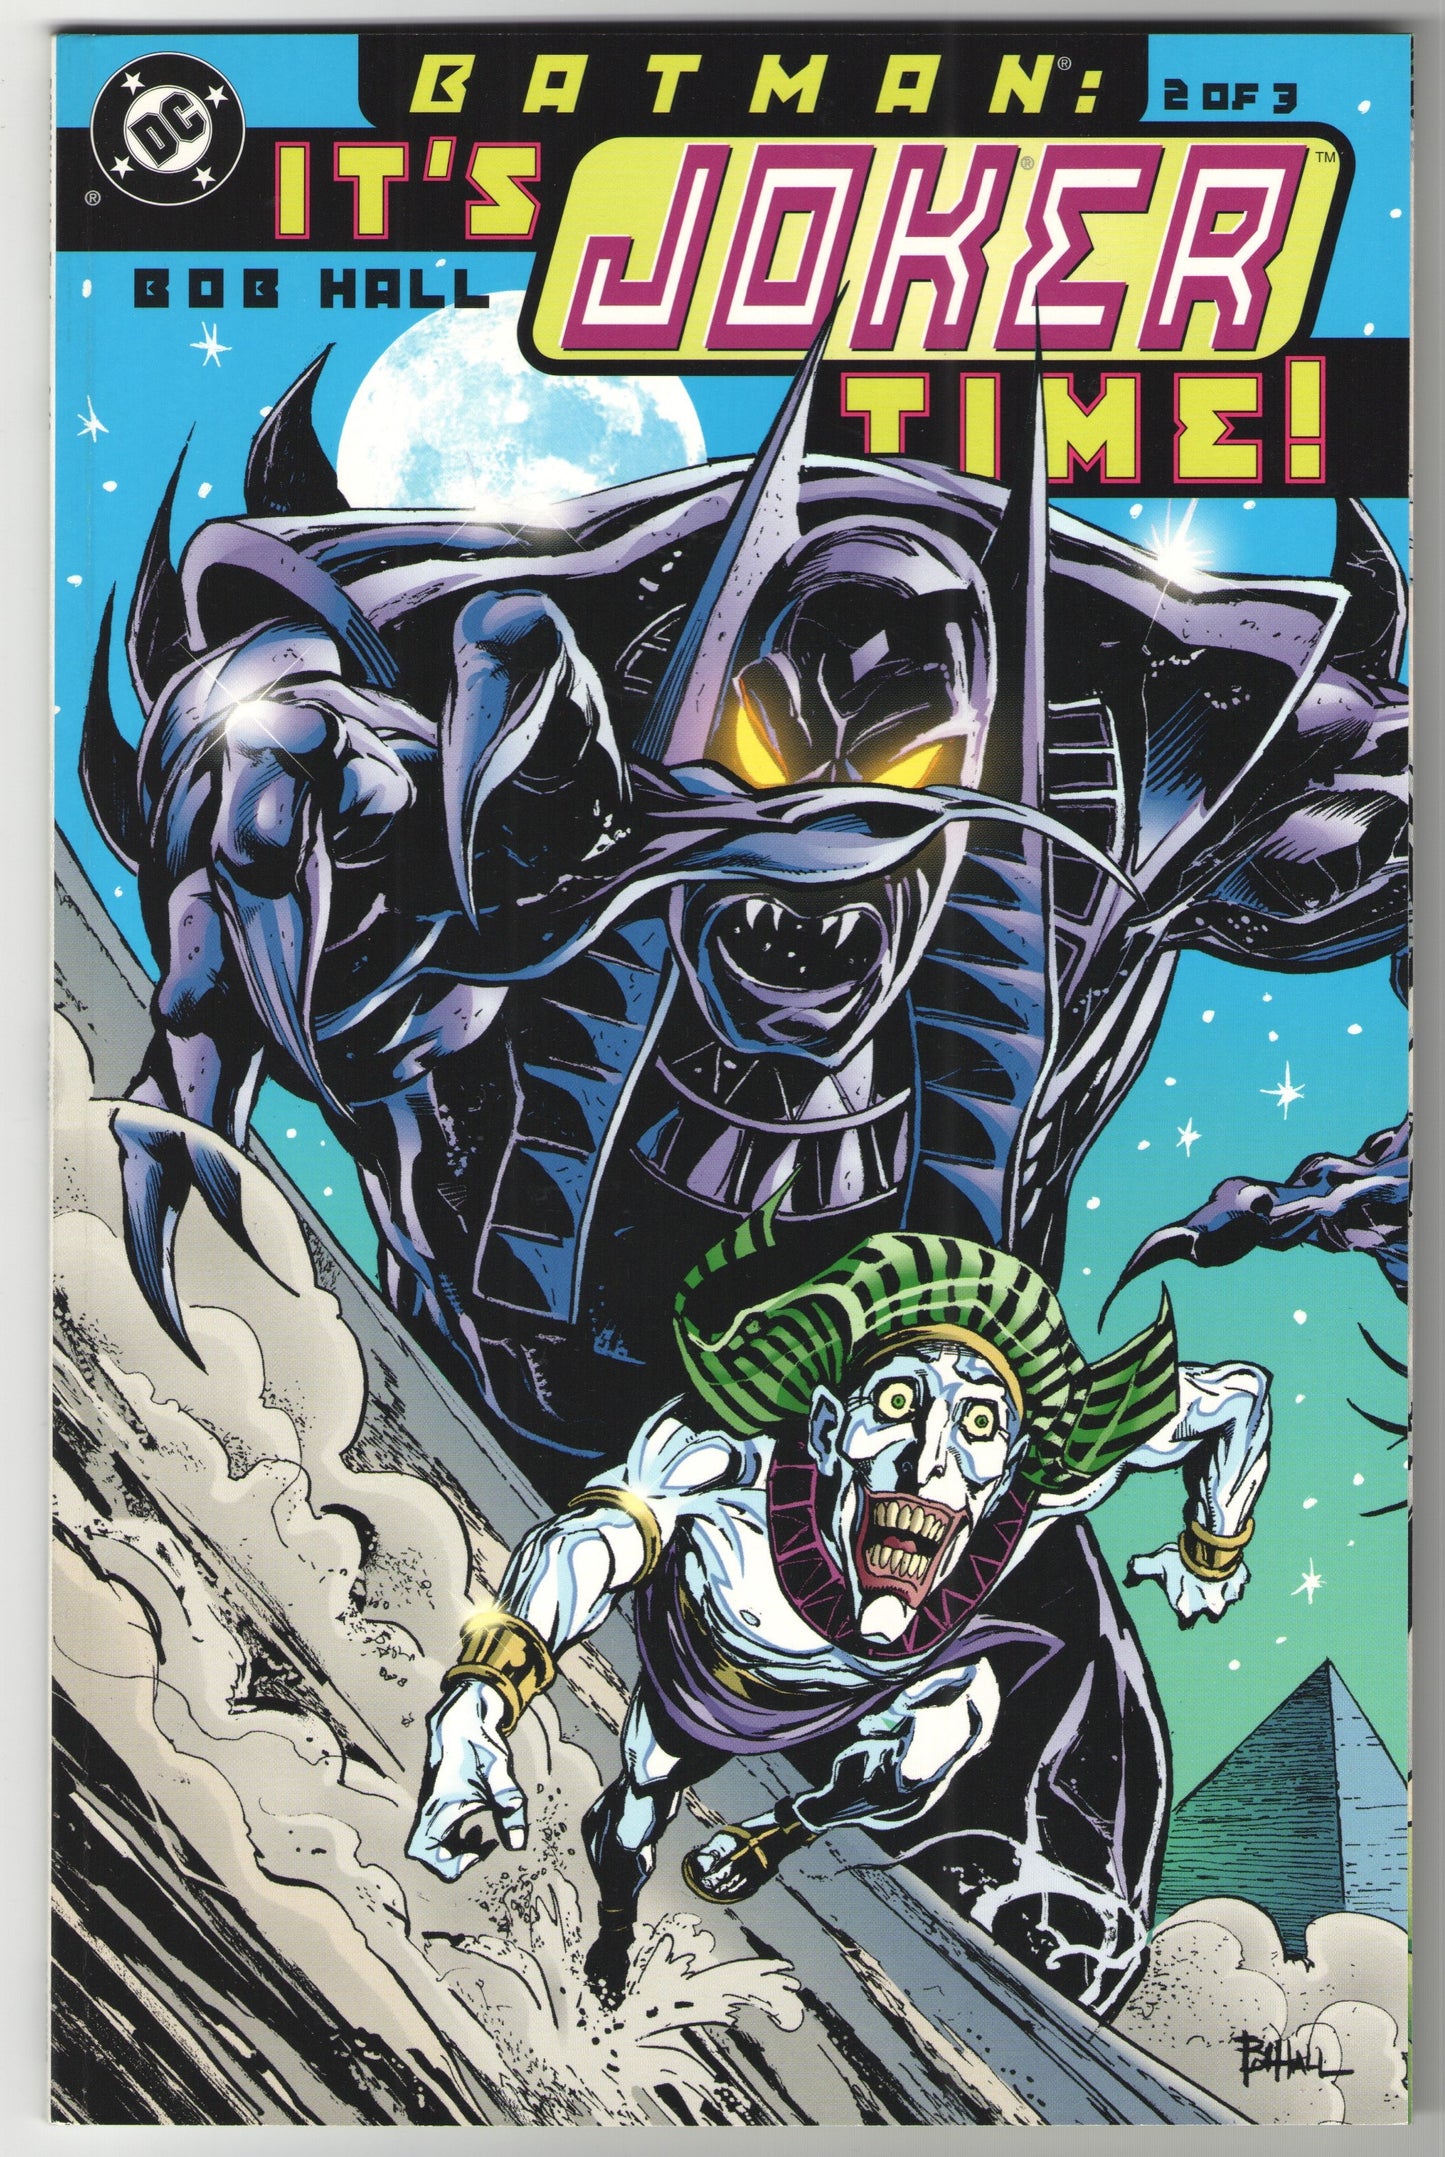 Batman: It's Joker Time! Complete Limited Series (2000)